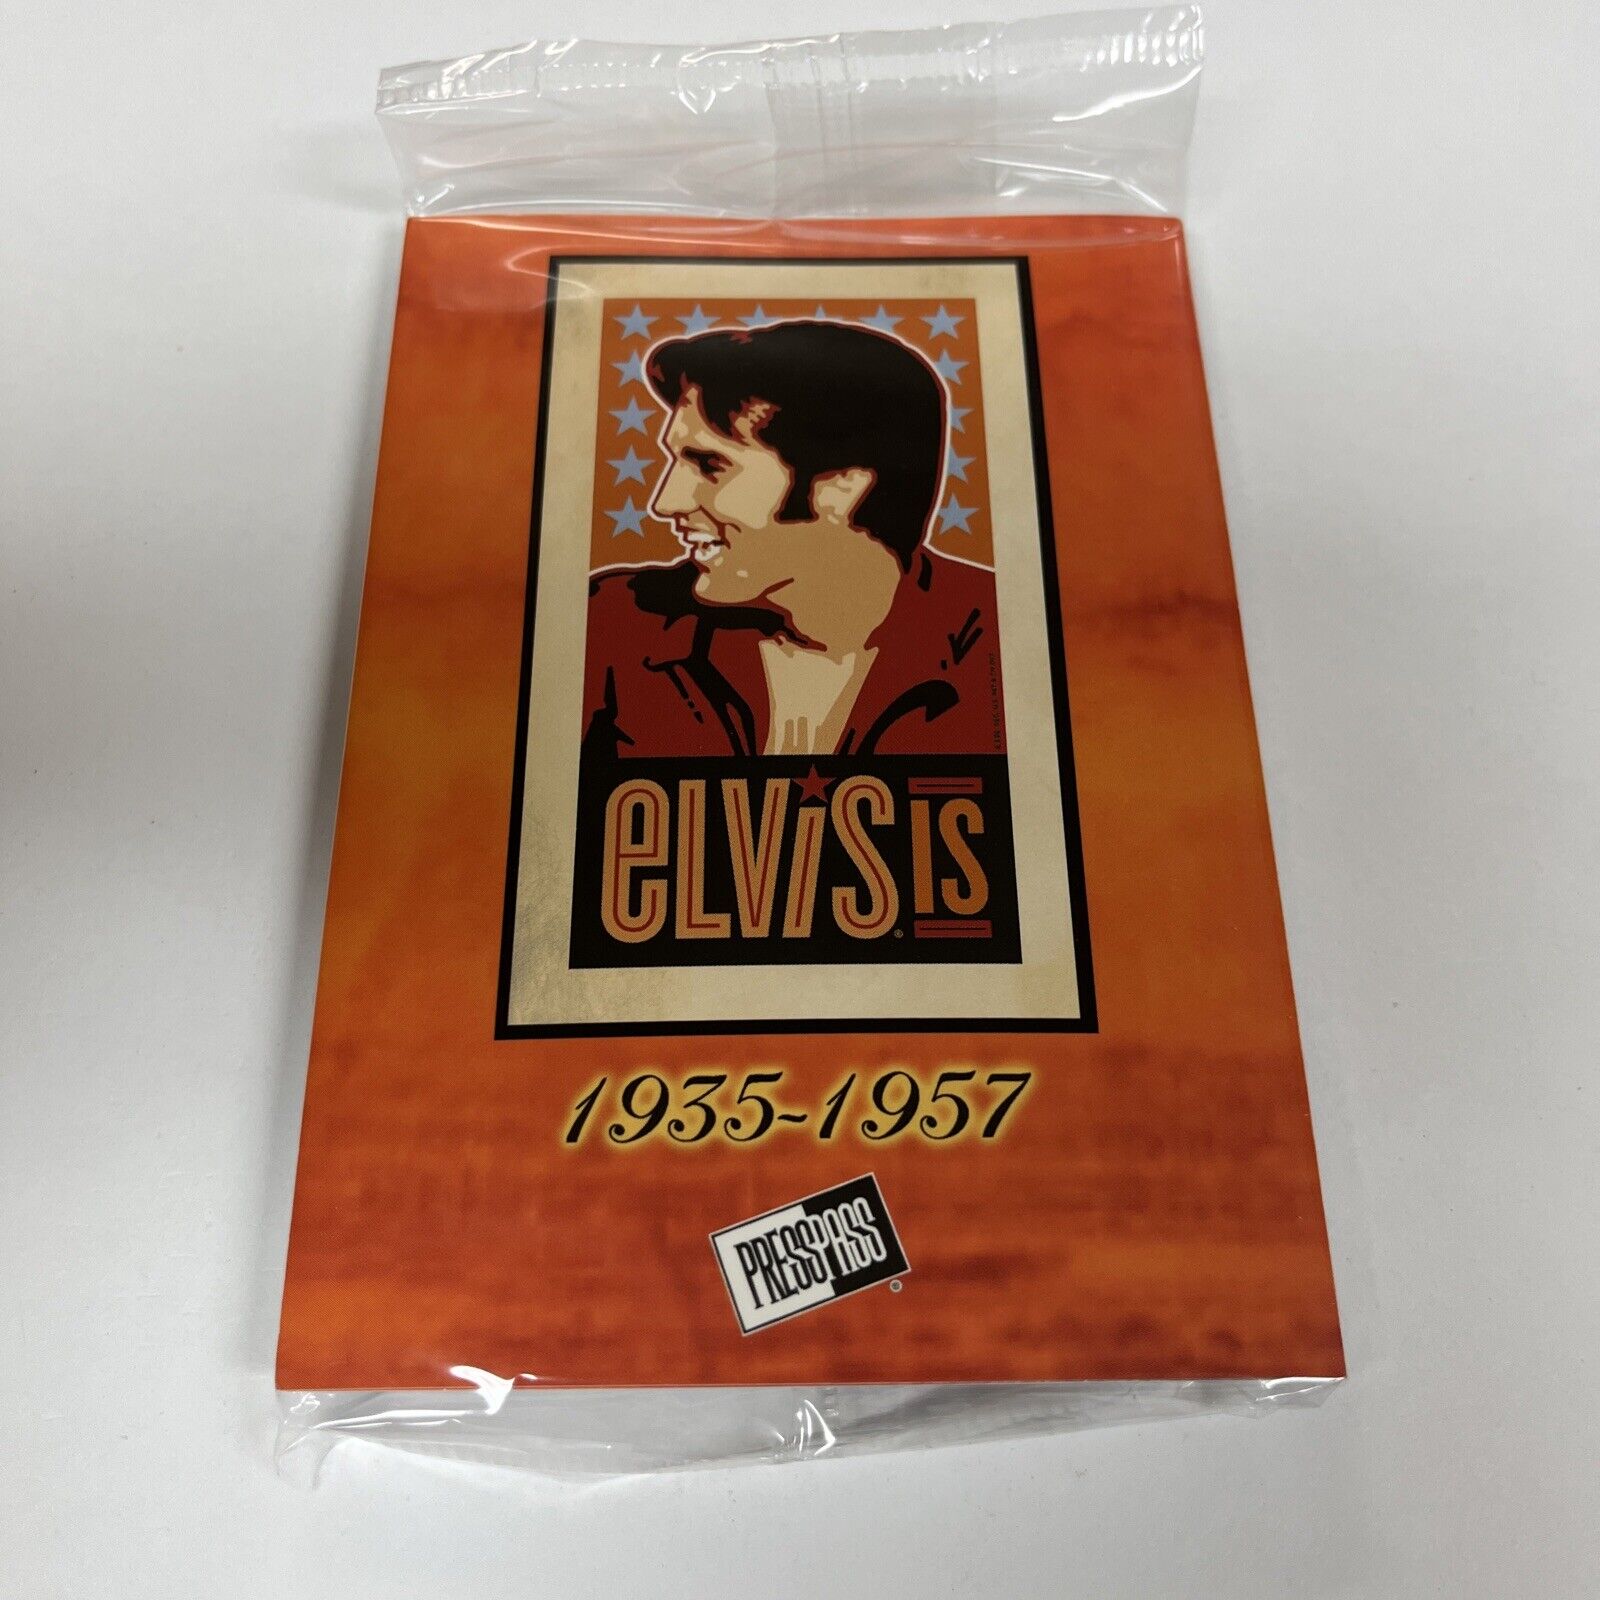 2007 Press Pass Elvis Is Timeline (1935-1957) Sealed Jumbo Trading Card 